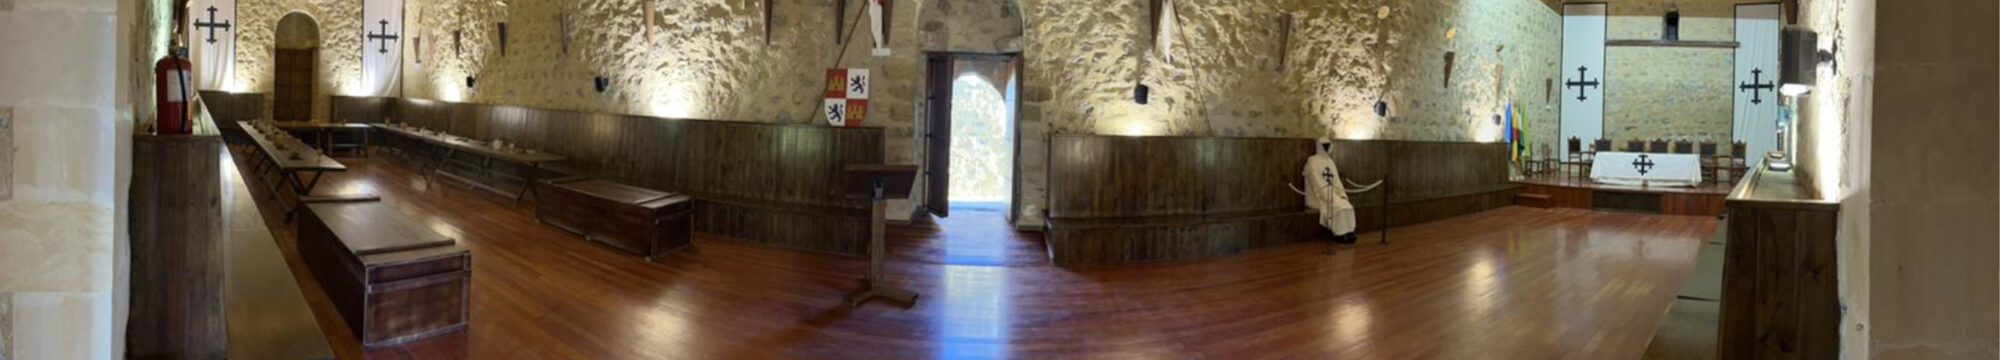 Sala capitular castillo de Alcaudete